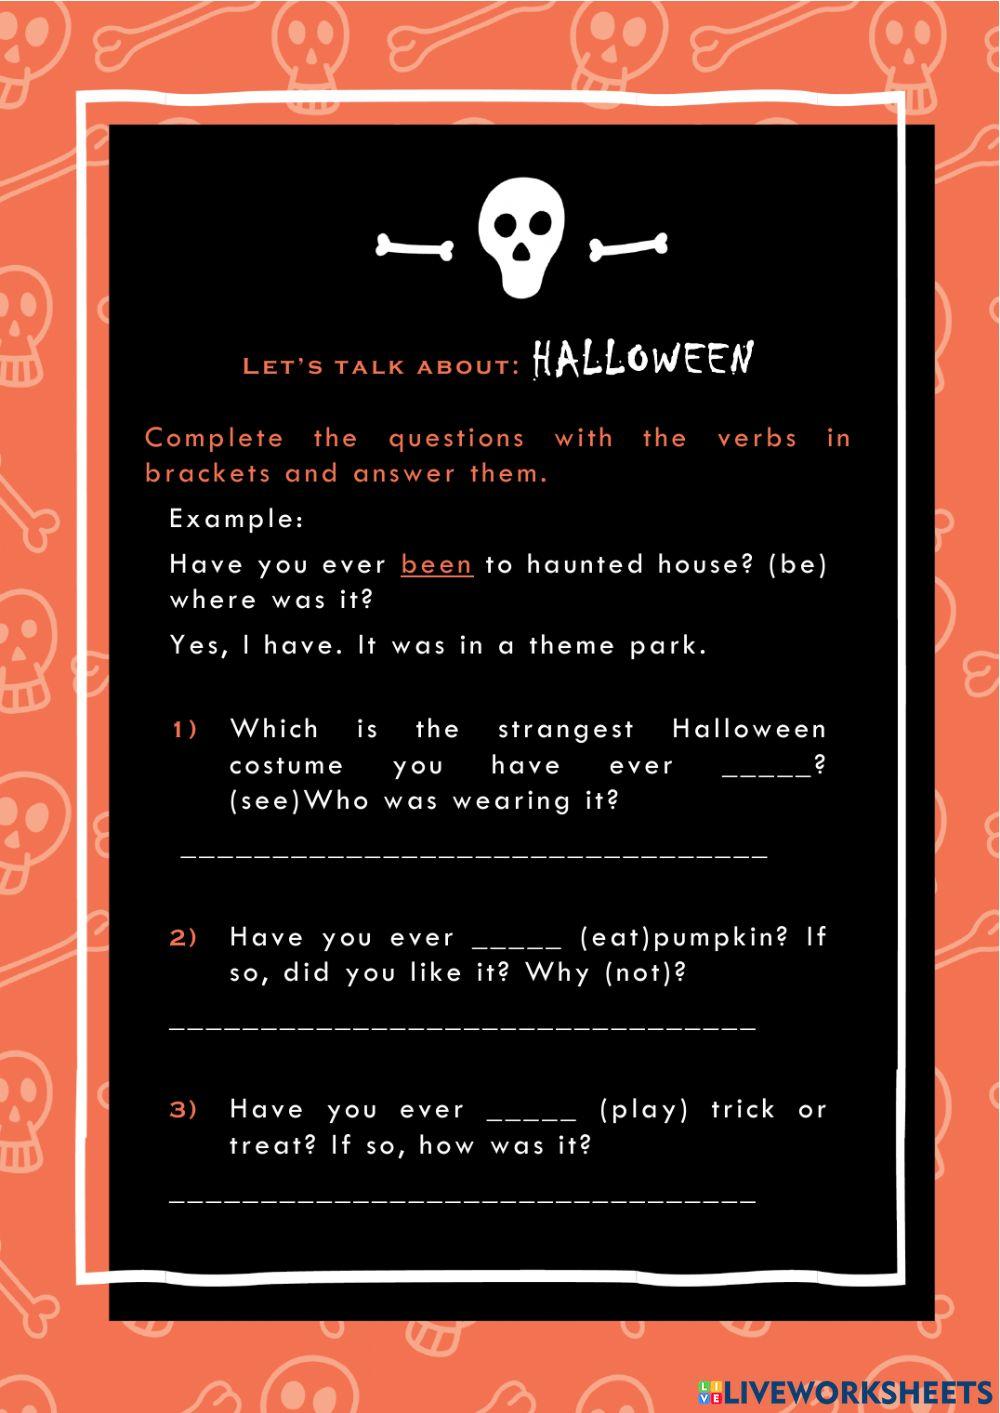 Halloween Quiz - Have you ever